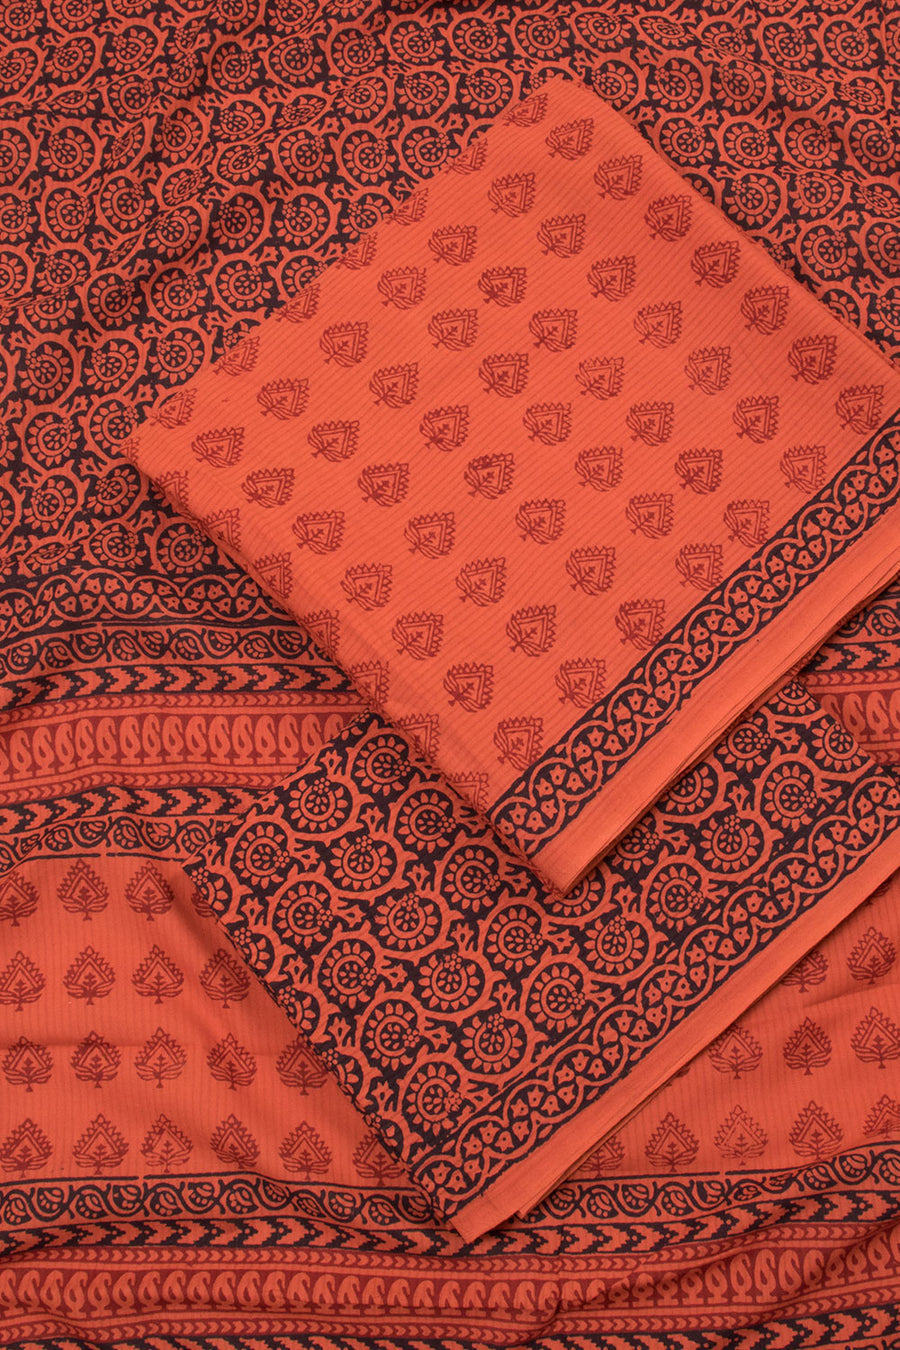 Caramel Brown with Black Bagh Printed Cotton 3-Piece Salwar Suit Material - 10063605